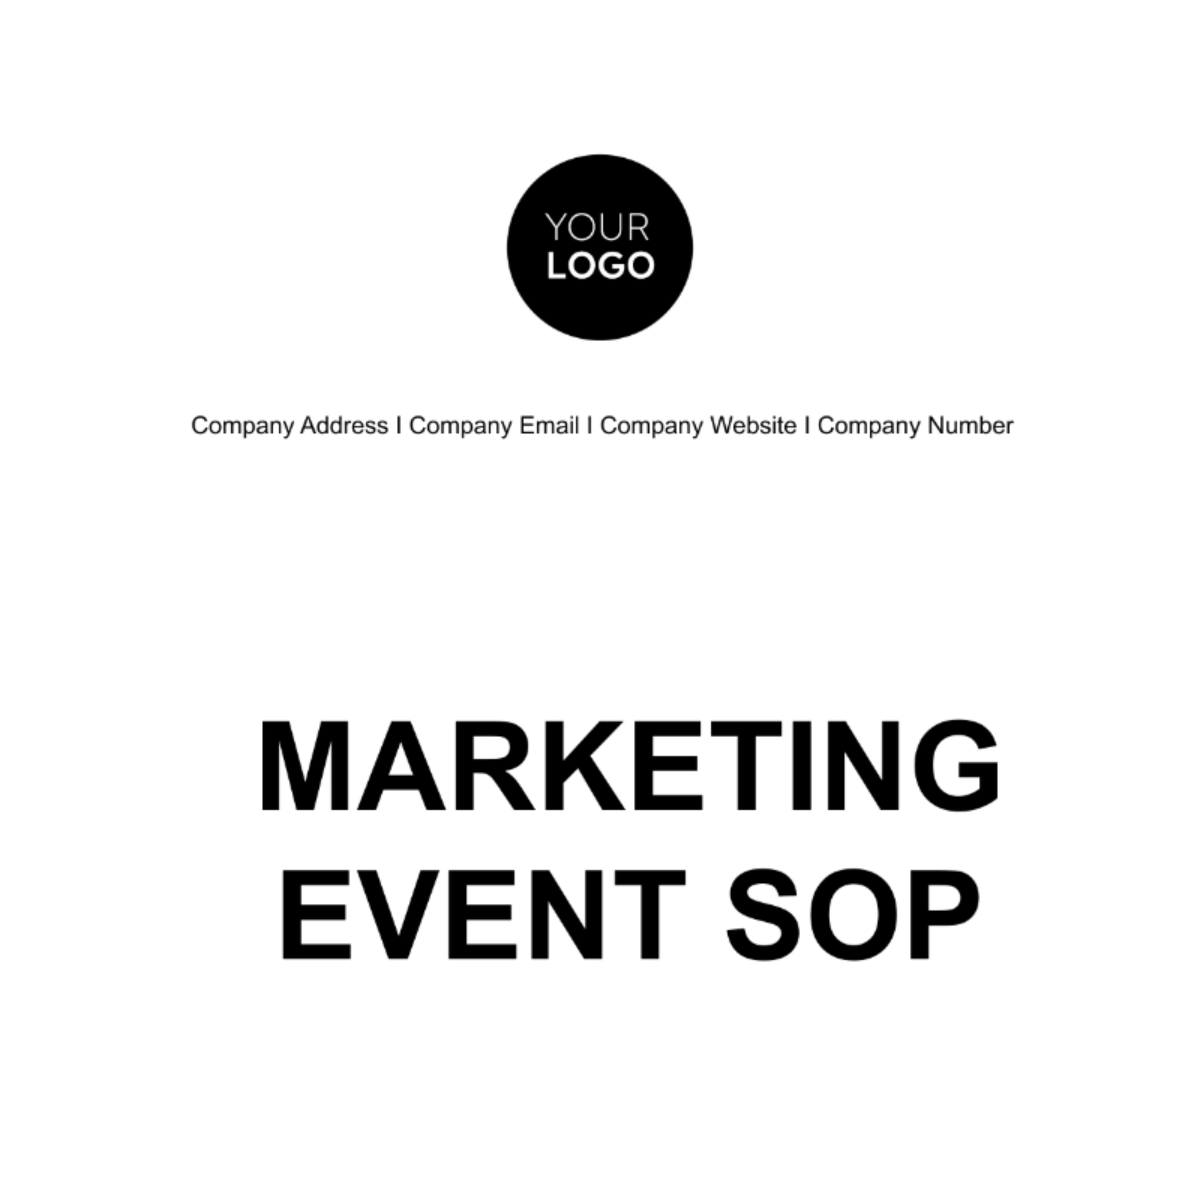 Marketing Event SOP Template